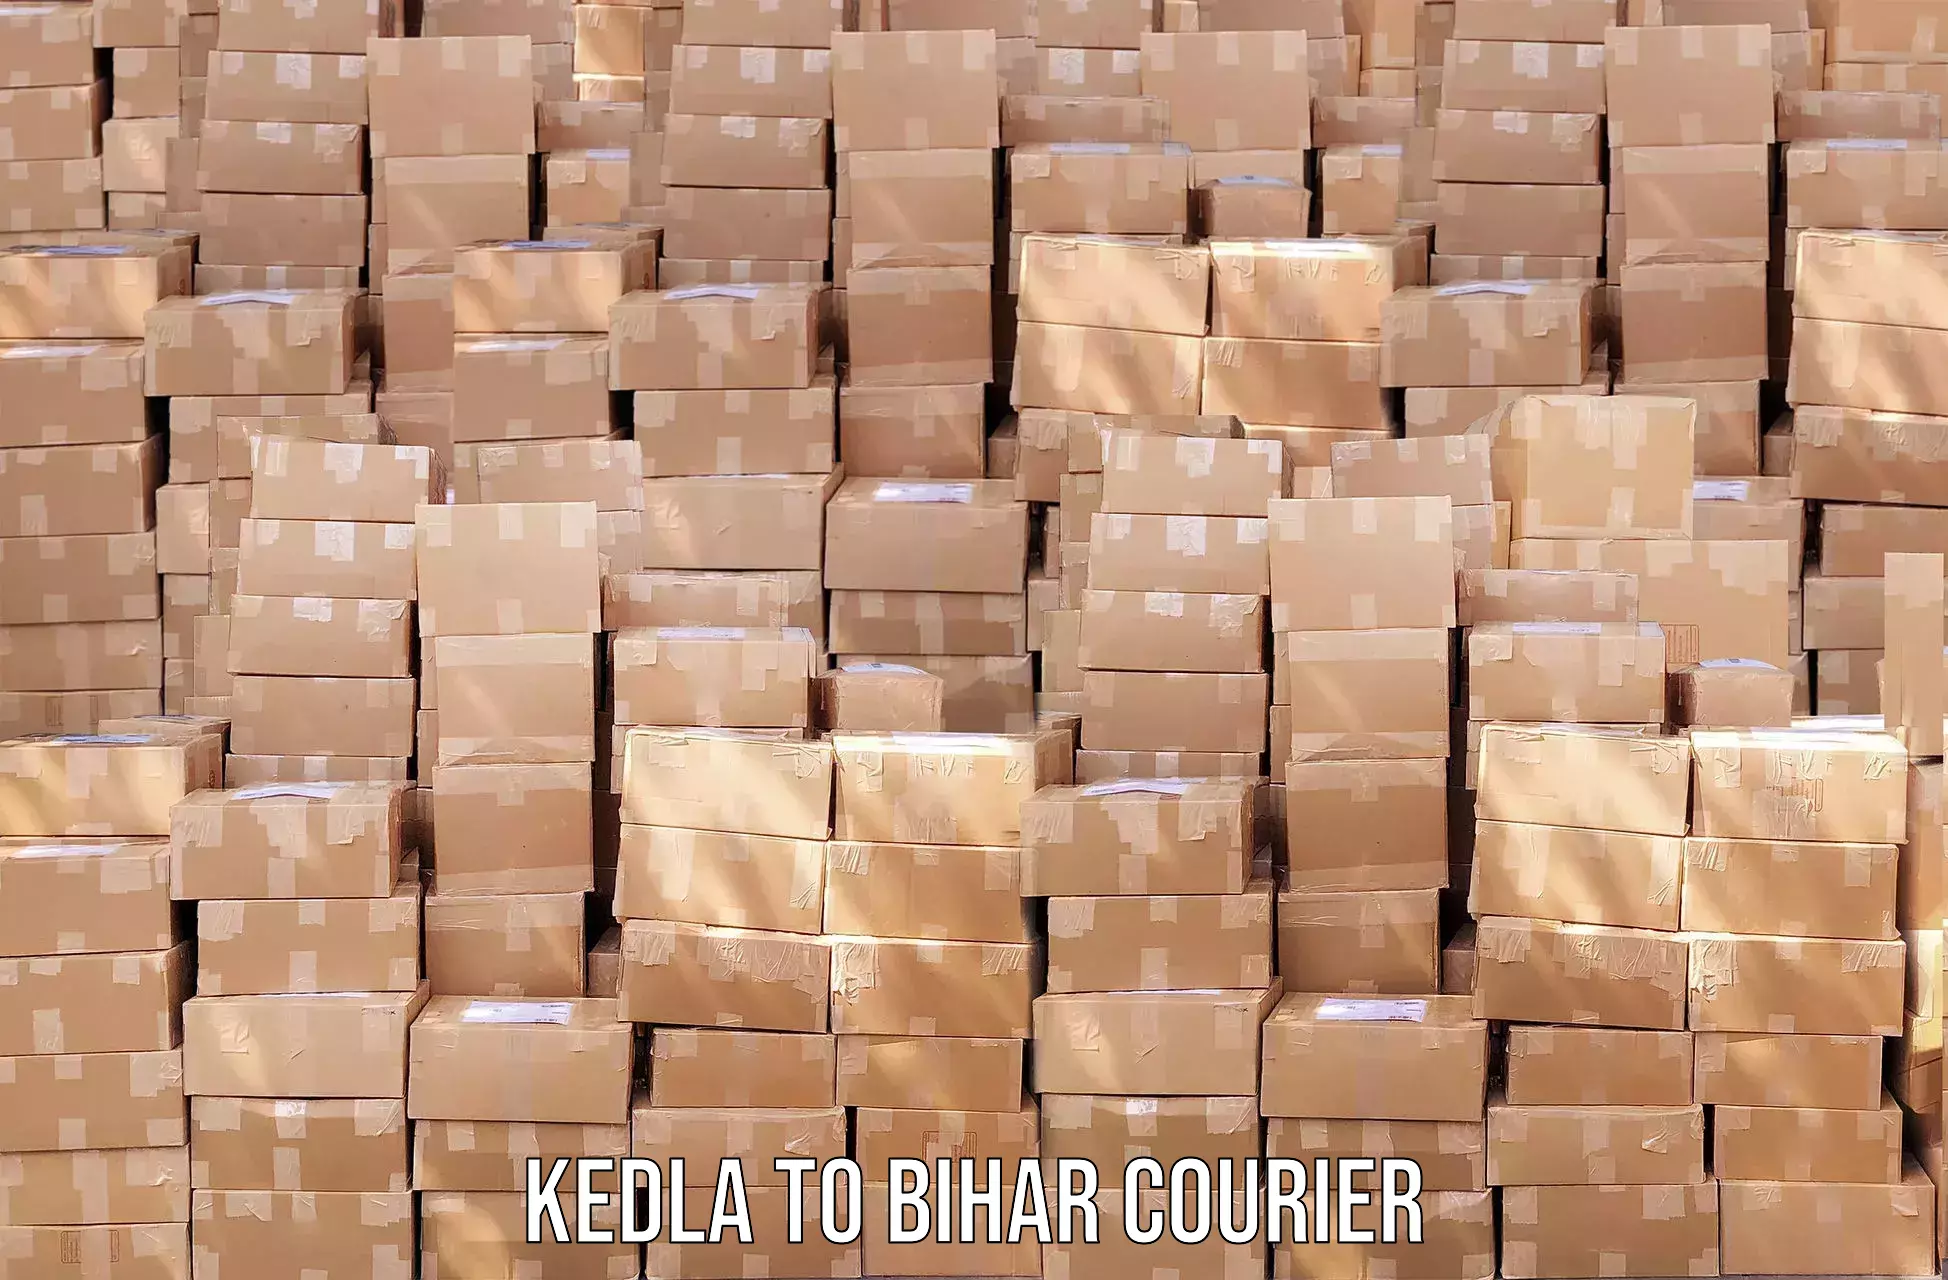 Courier membership Kedla to Bihar